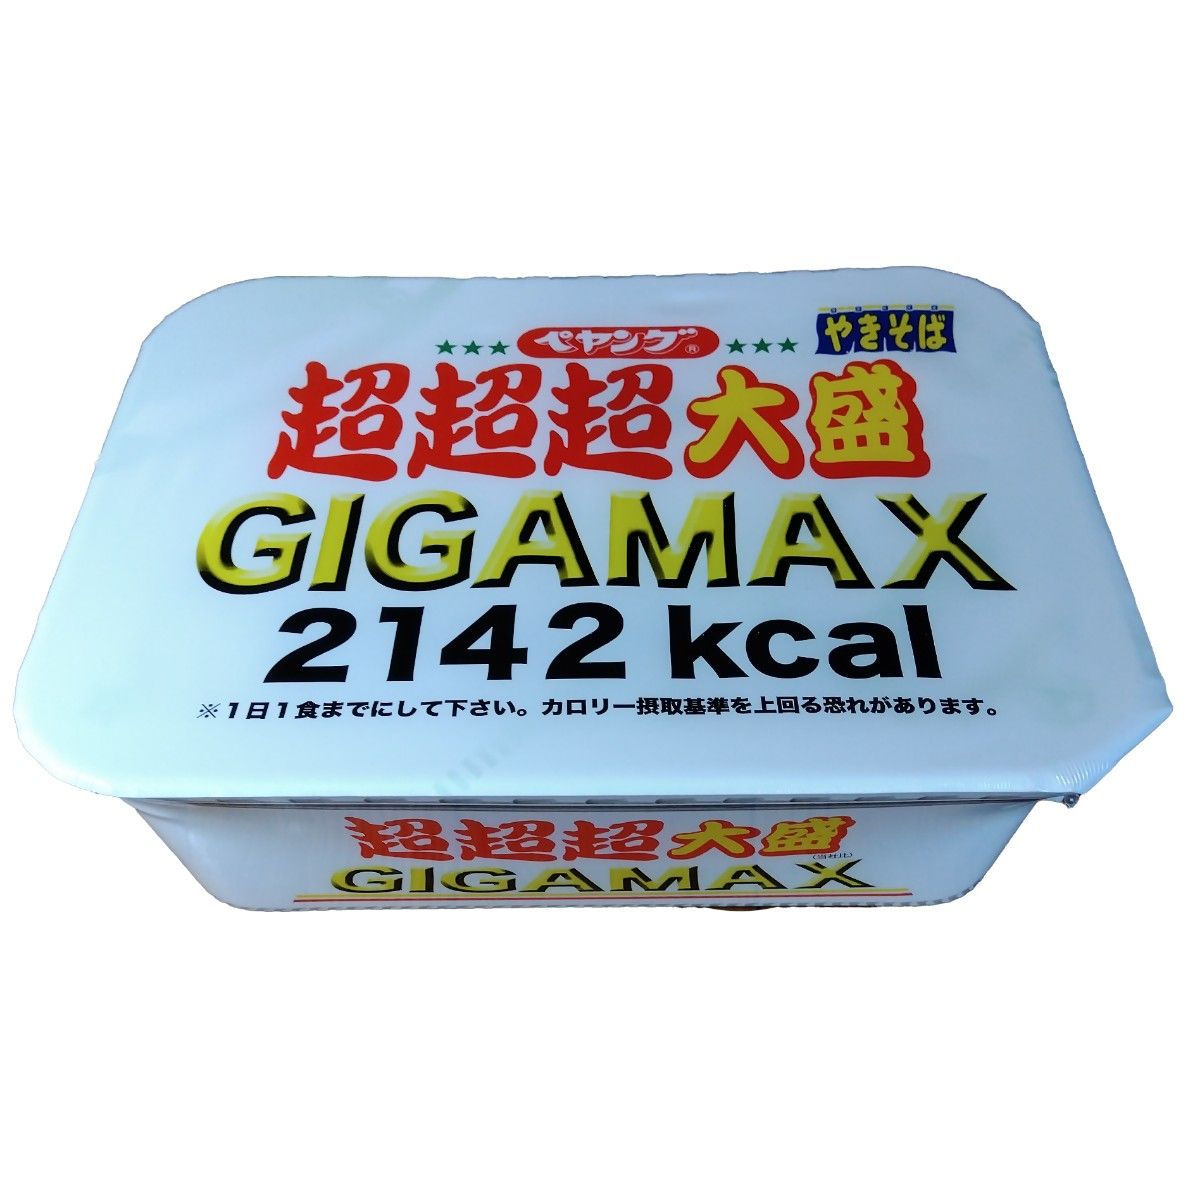 【2Pセット】ペヤング 超超超大盛 GIGAMAX  ギガマックス やきそば 大容量 2142kcal 439g まるか食品